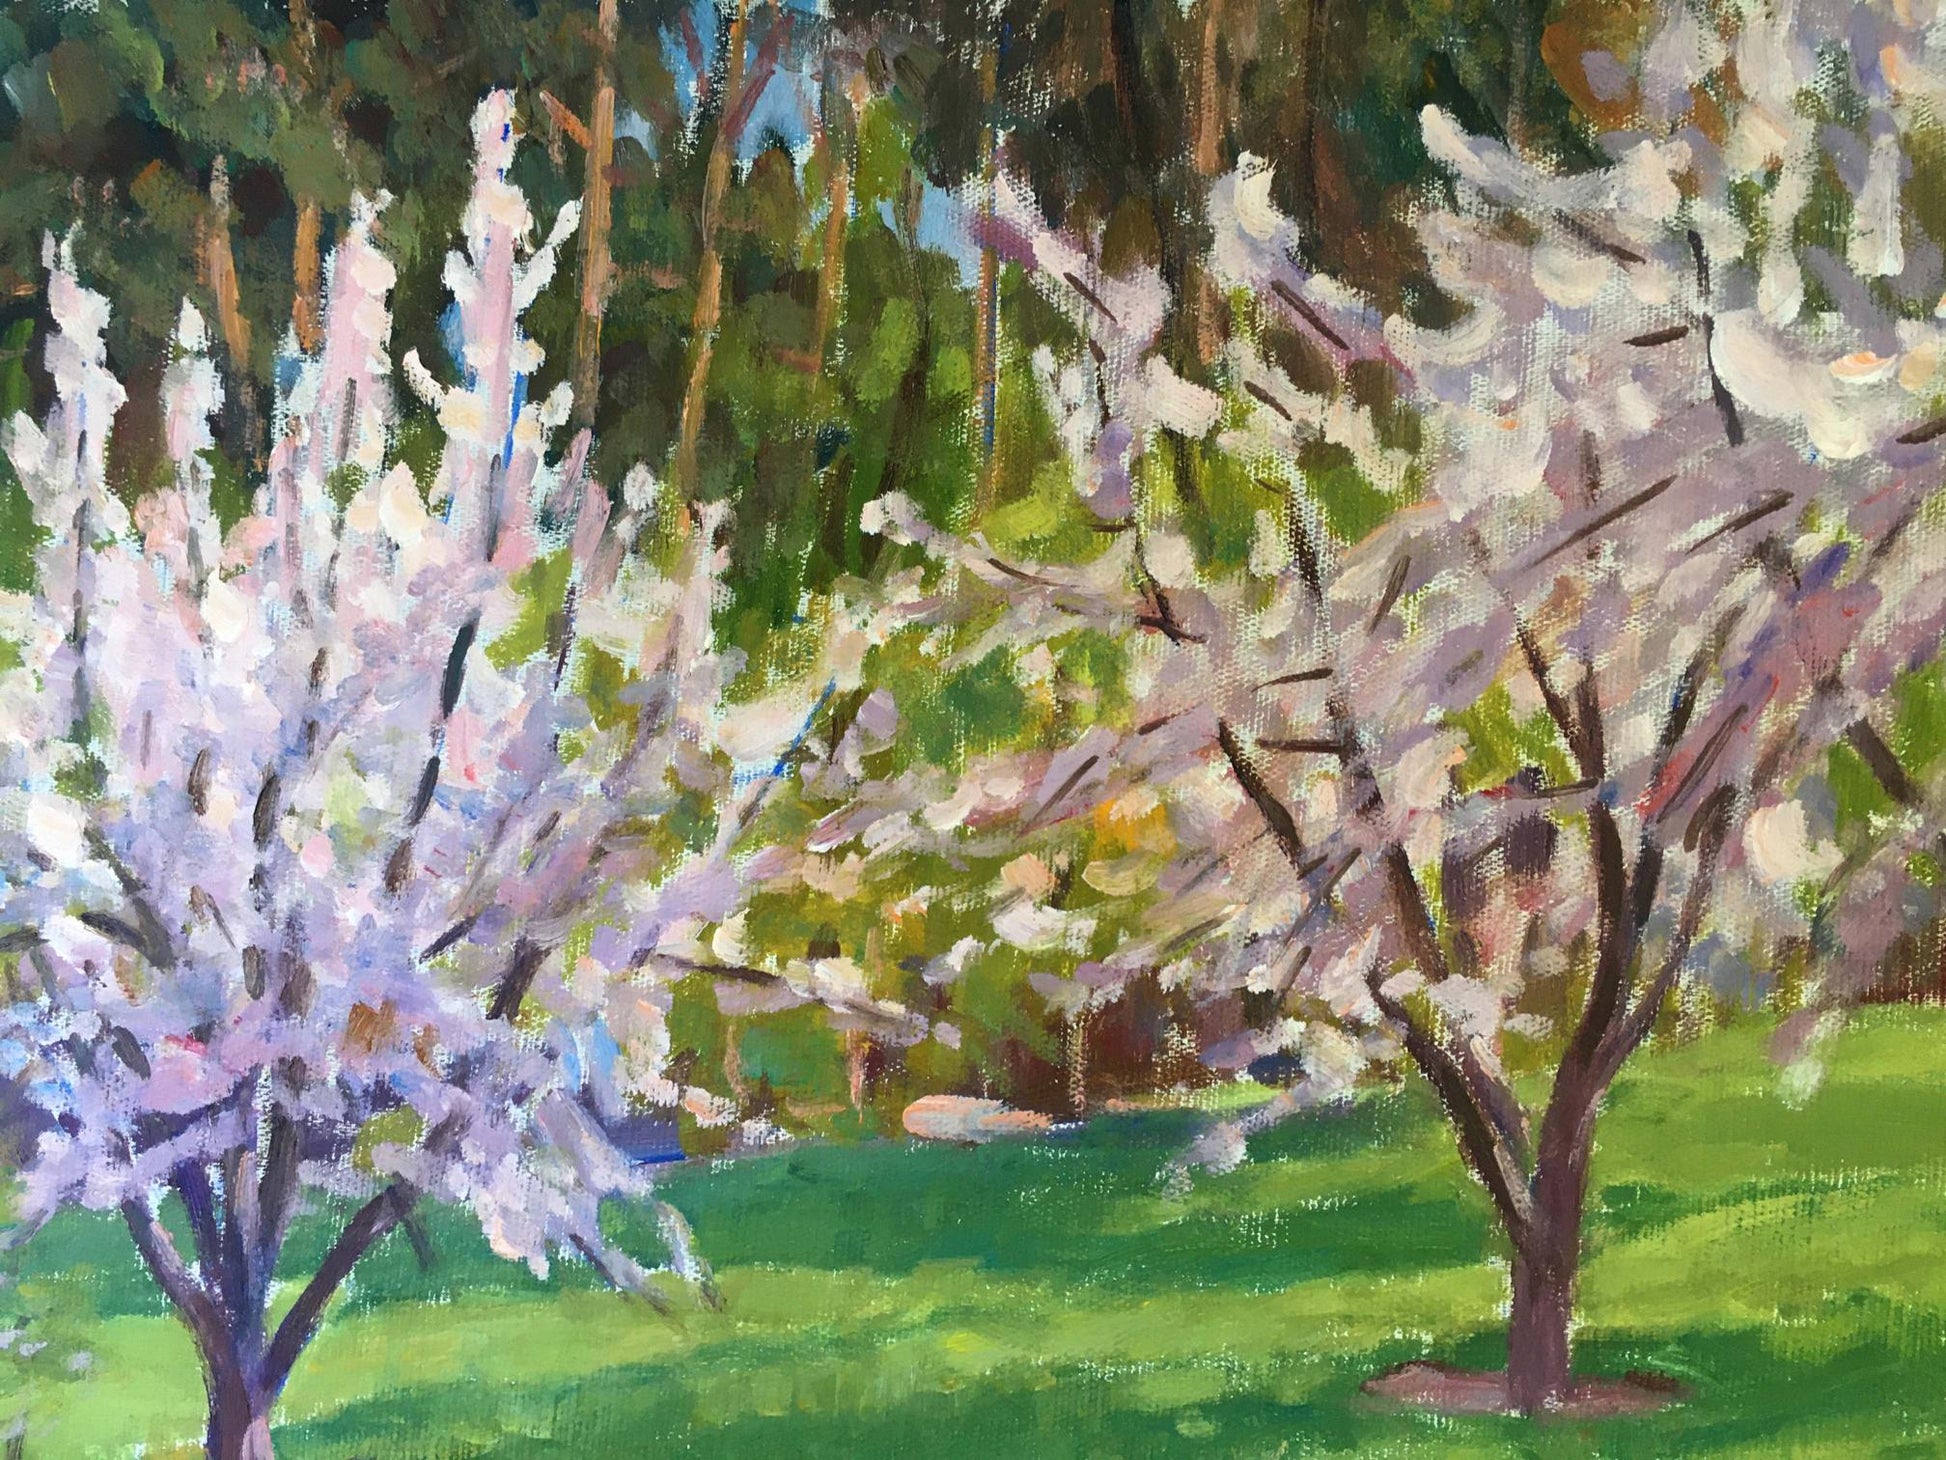 Trees Bloom painted in oil by Vladimir Mikhailovich Chernikov